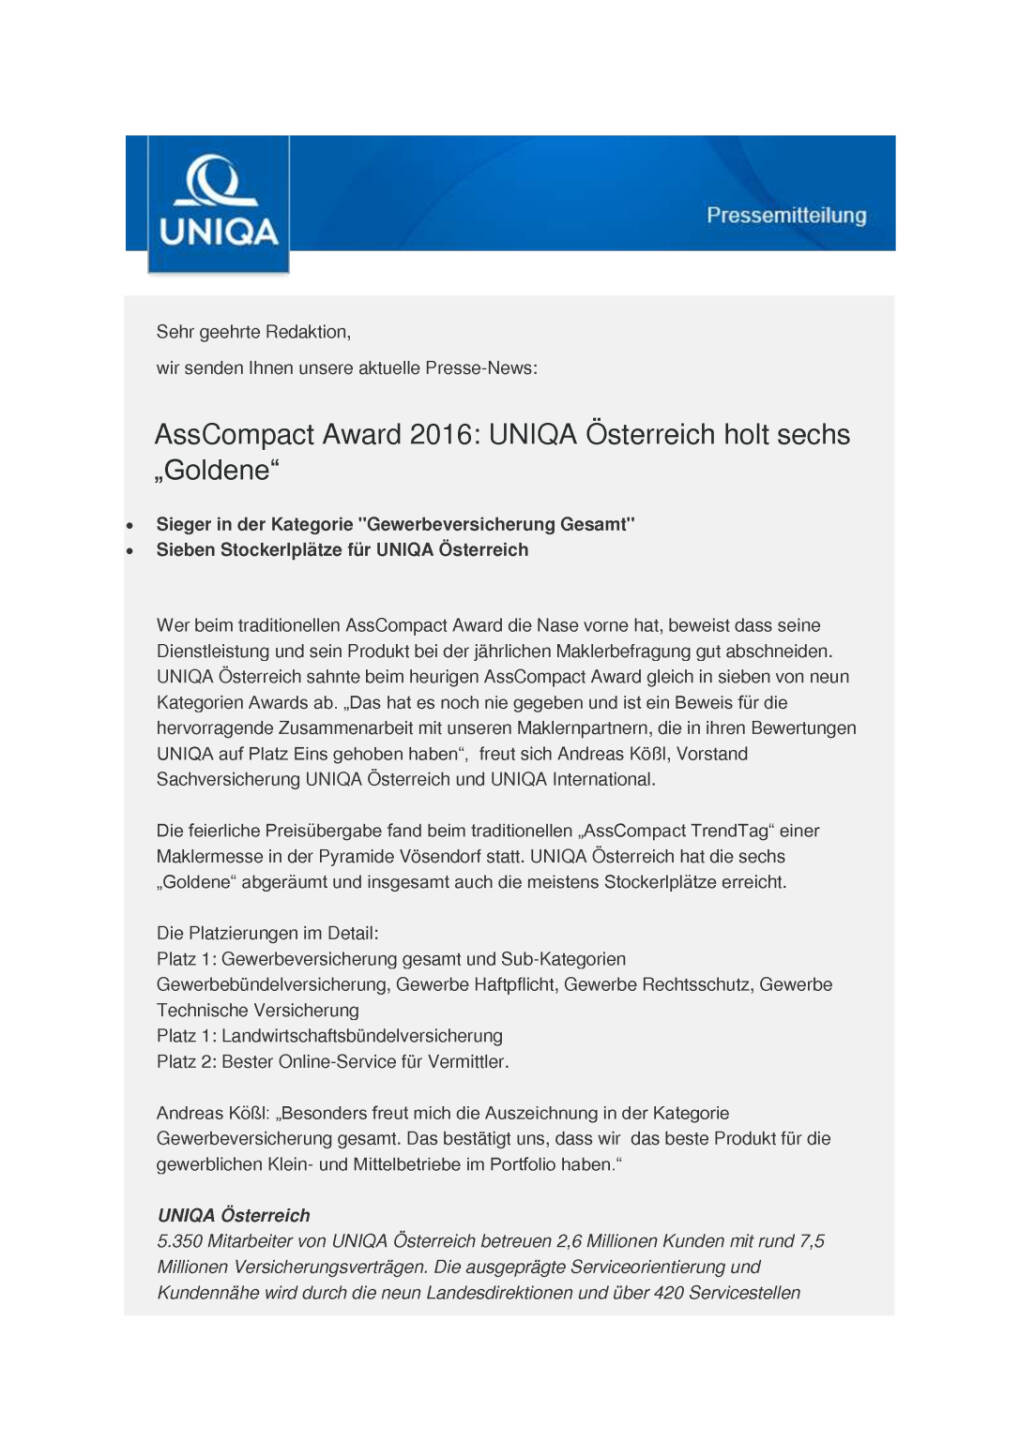 Uniqa Österreich: AssCompact Award 2016, Seite 1/2, komplettes Dokument unter http://boerse-social.com/static/uploads/file_1865_uniqa_osterreich_asscompact_award_2016.pdf